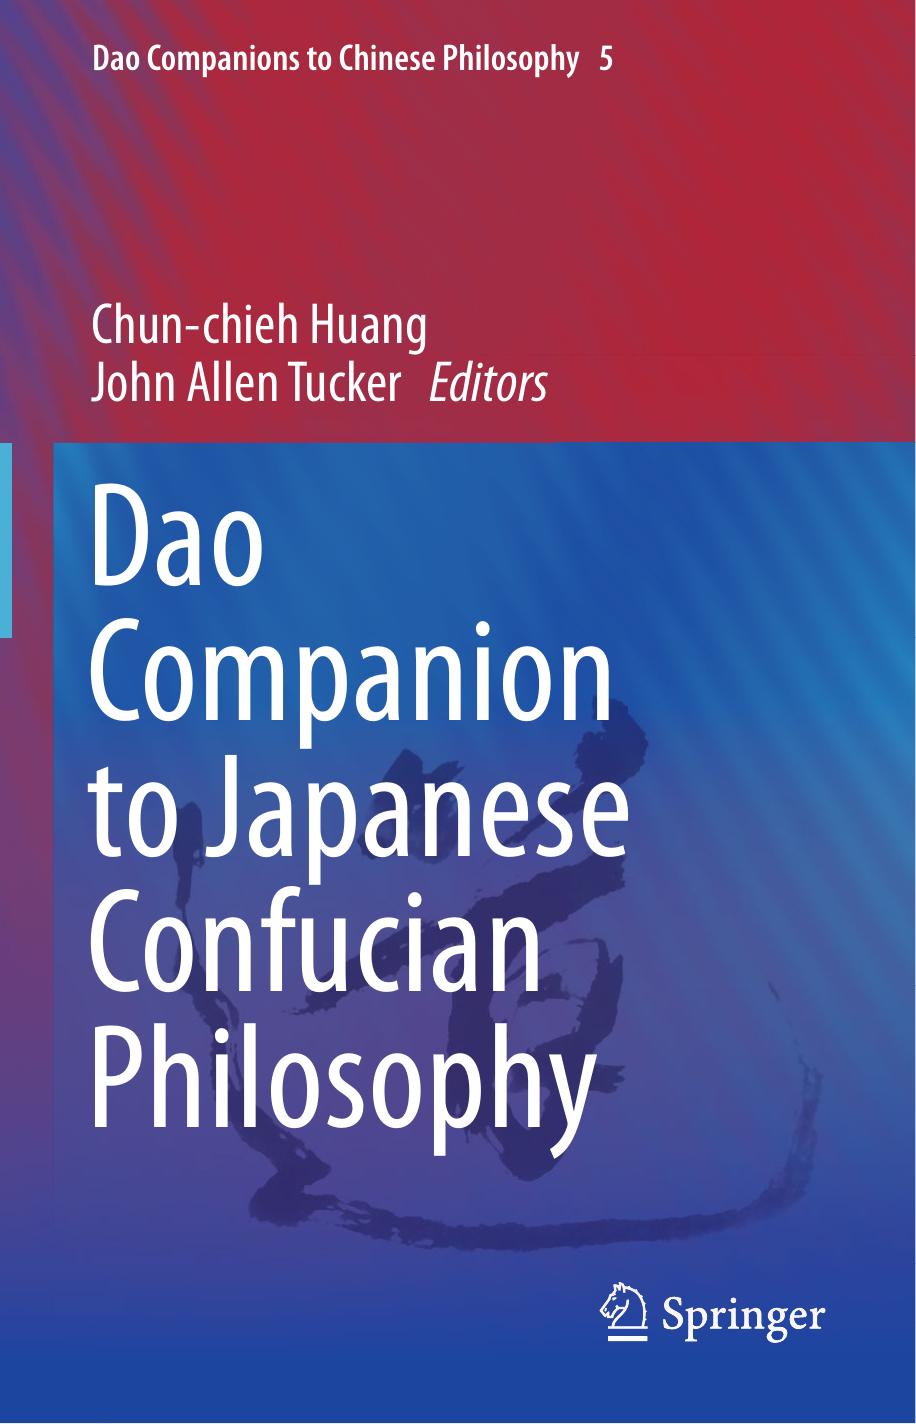 Dao Companion to Japanese Confucian Philosophy